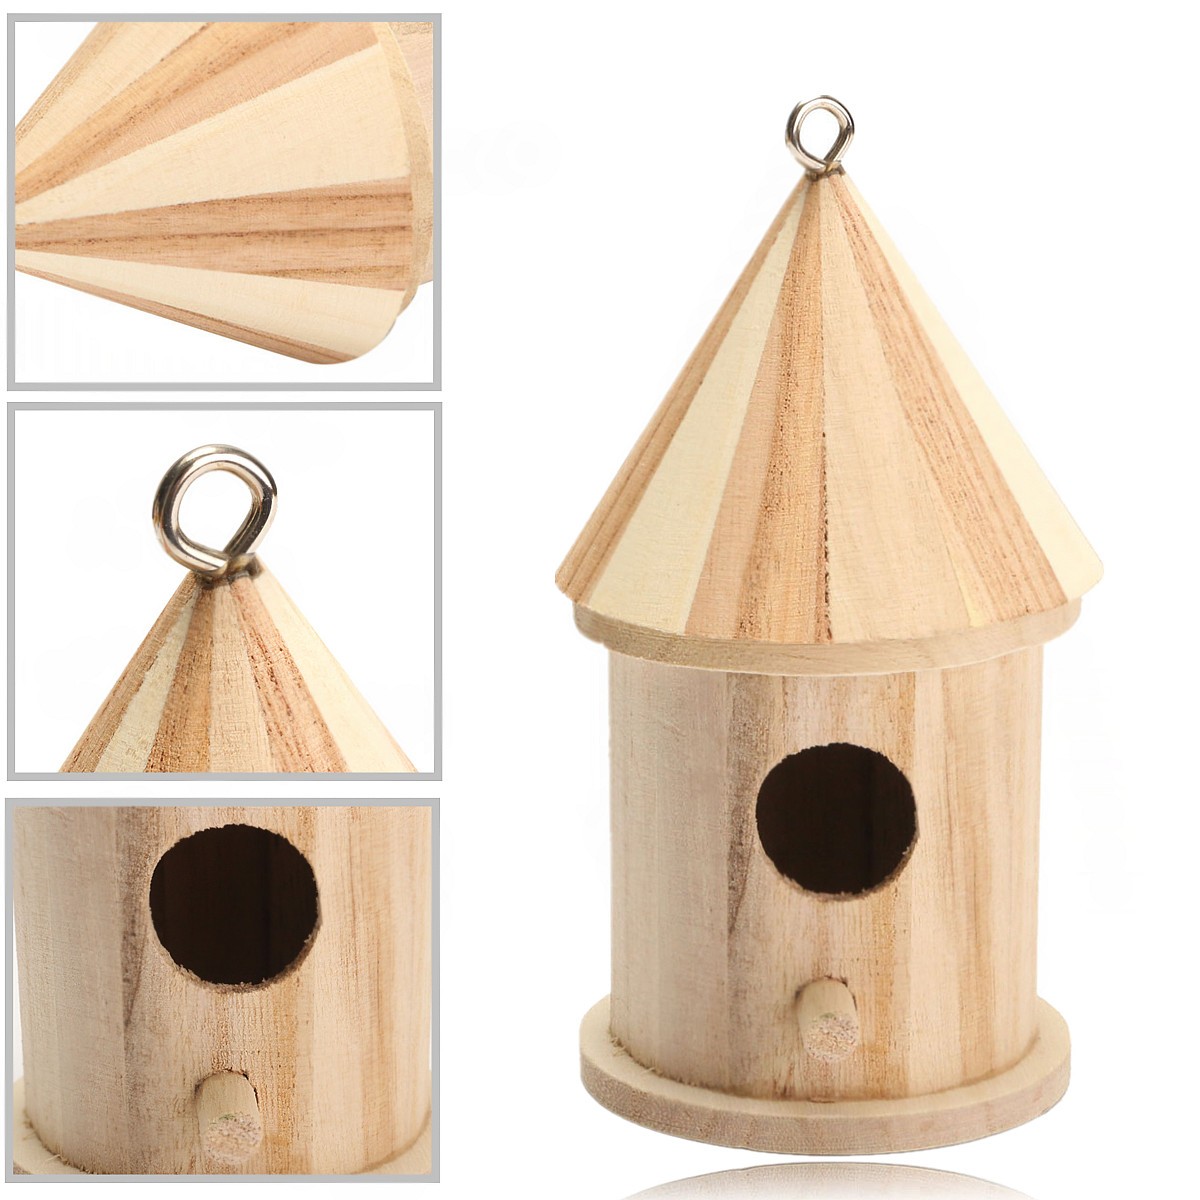 Wood-Wooden-Birdhouse-Bird-House-Shed-Garden-Yard-Hanging-Decor-16x78cm-1632841-4